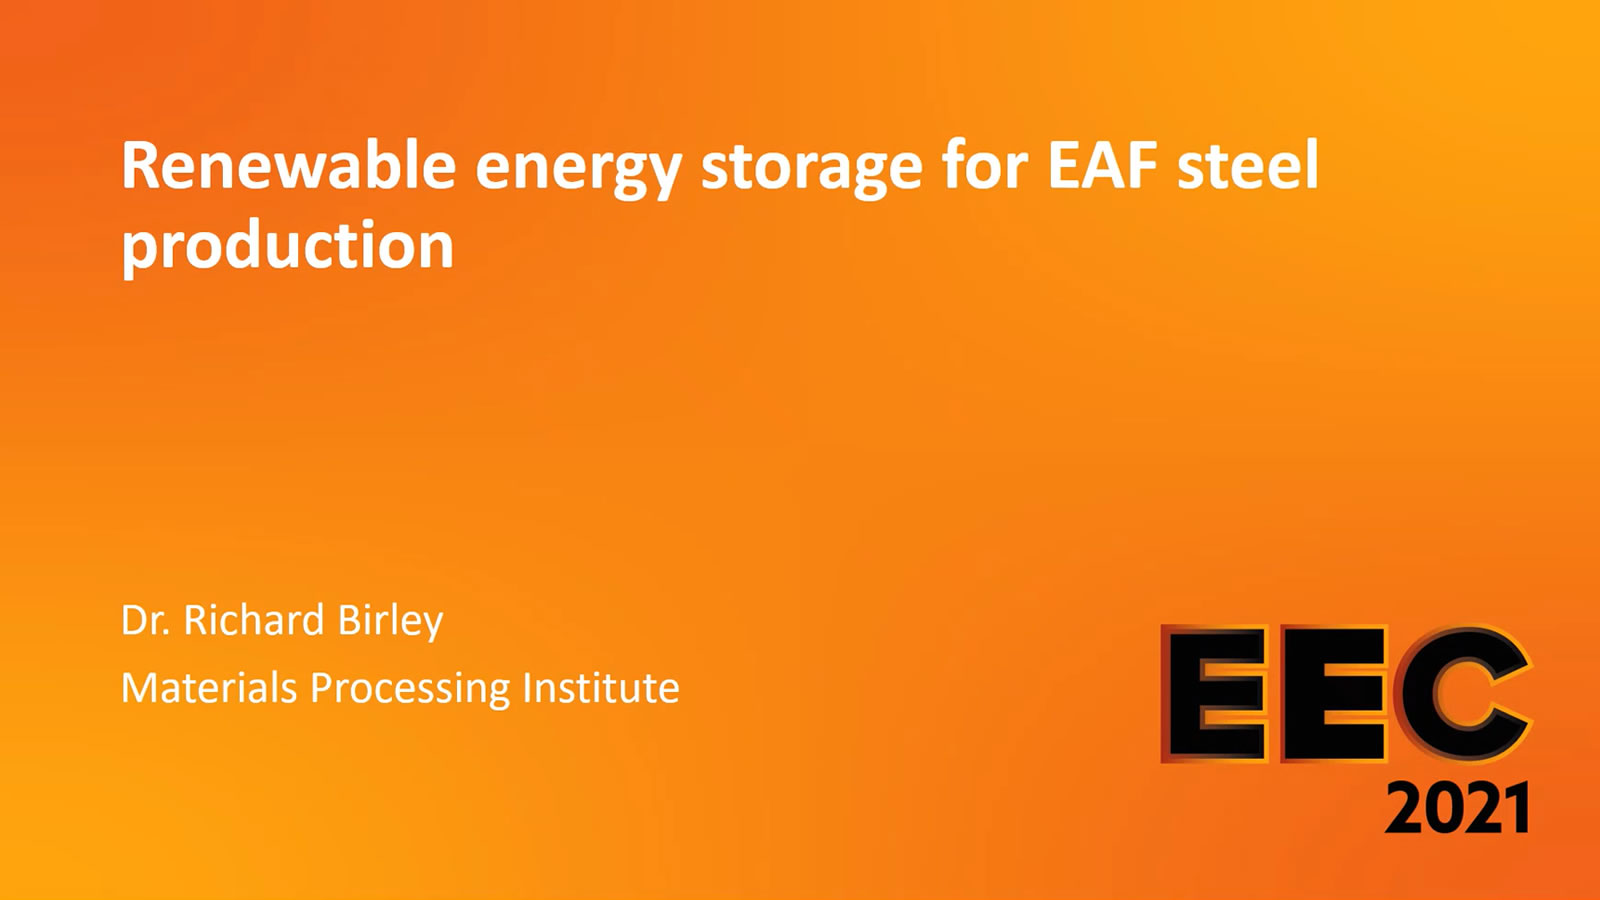 Renewable Energy Storage for EAF Steel Production - Dr Richard Birley at EEC 2021